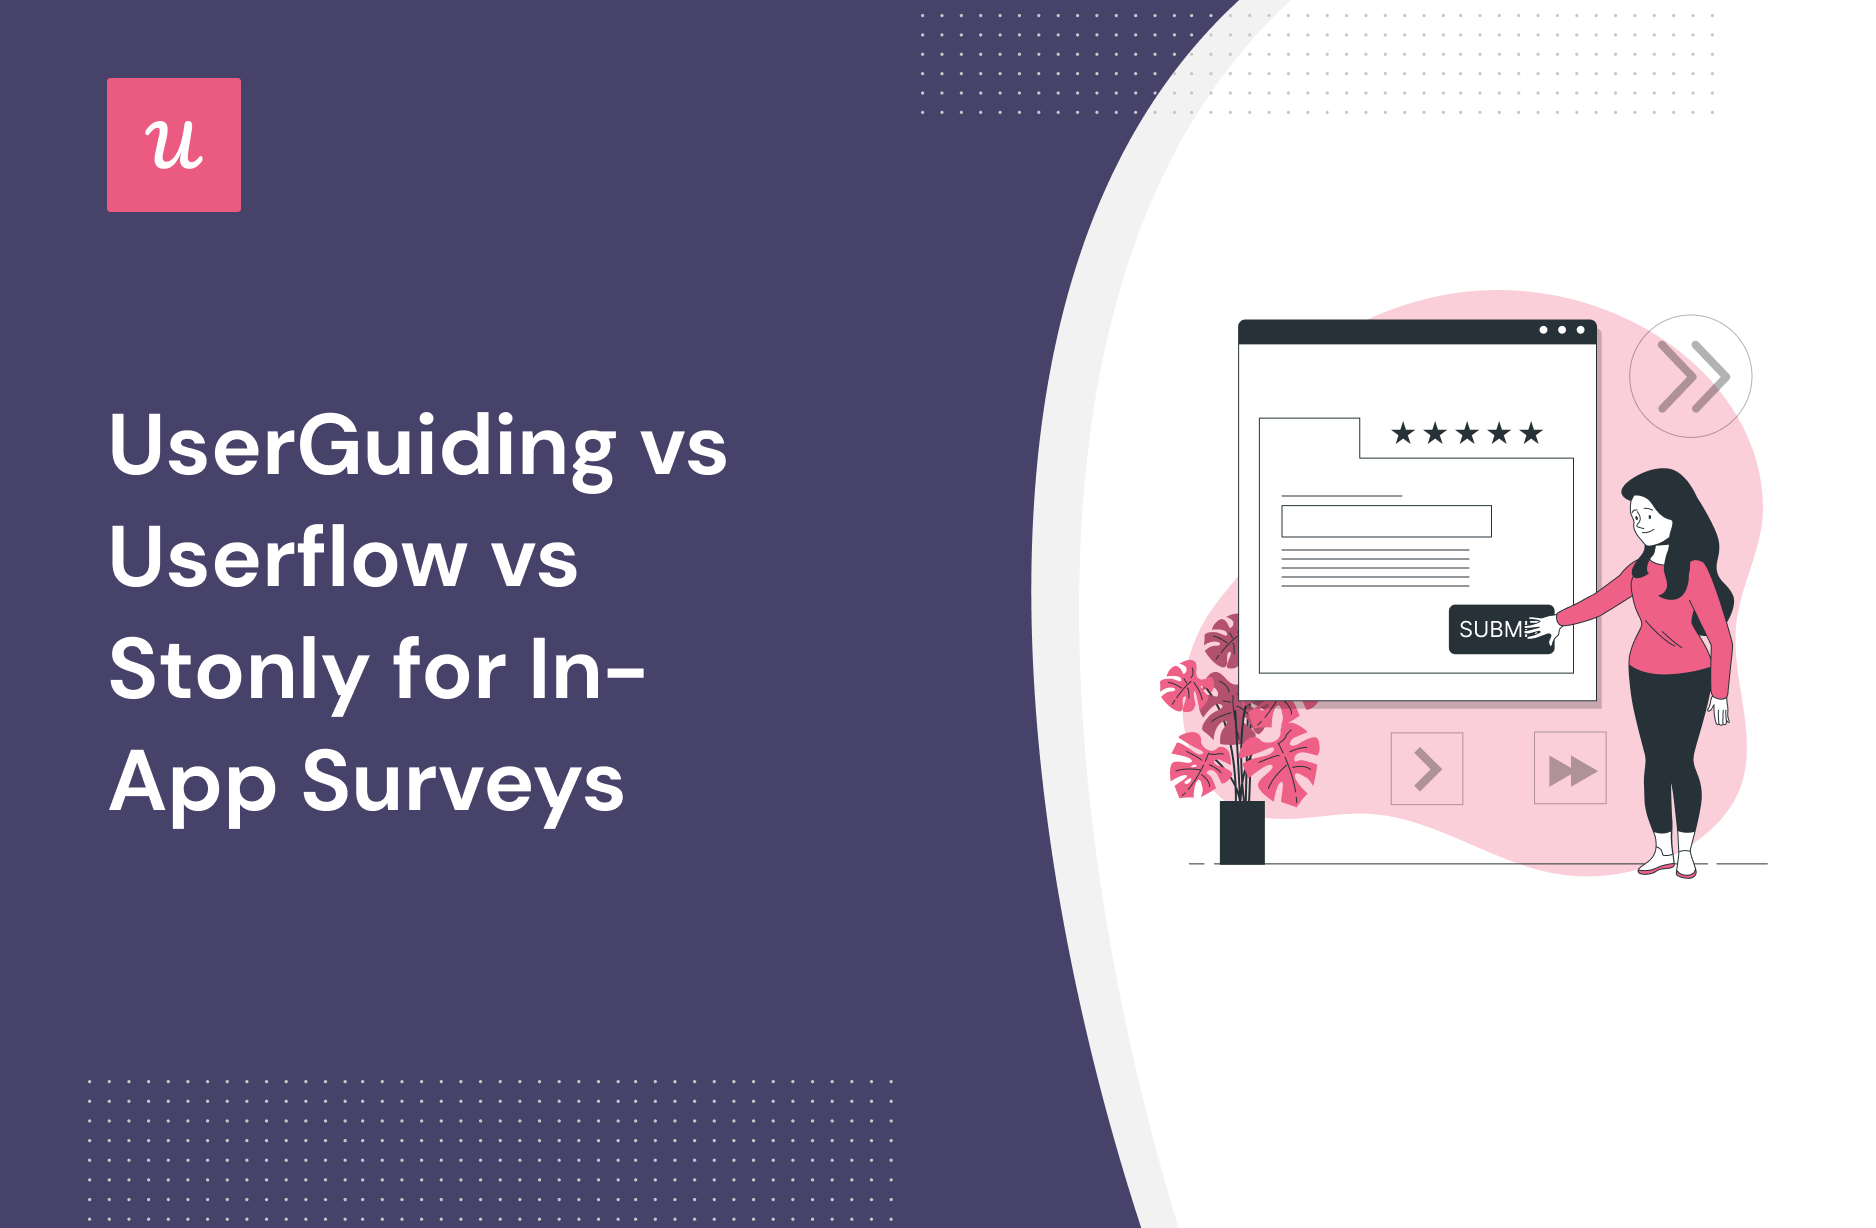 UserGuiding vs Userflow vs Stonly for In-app surveys